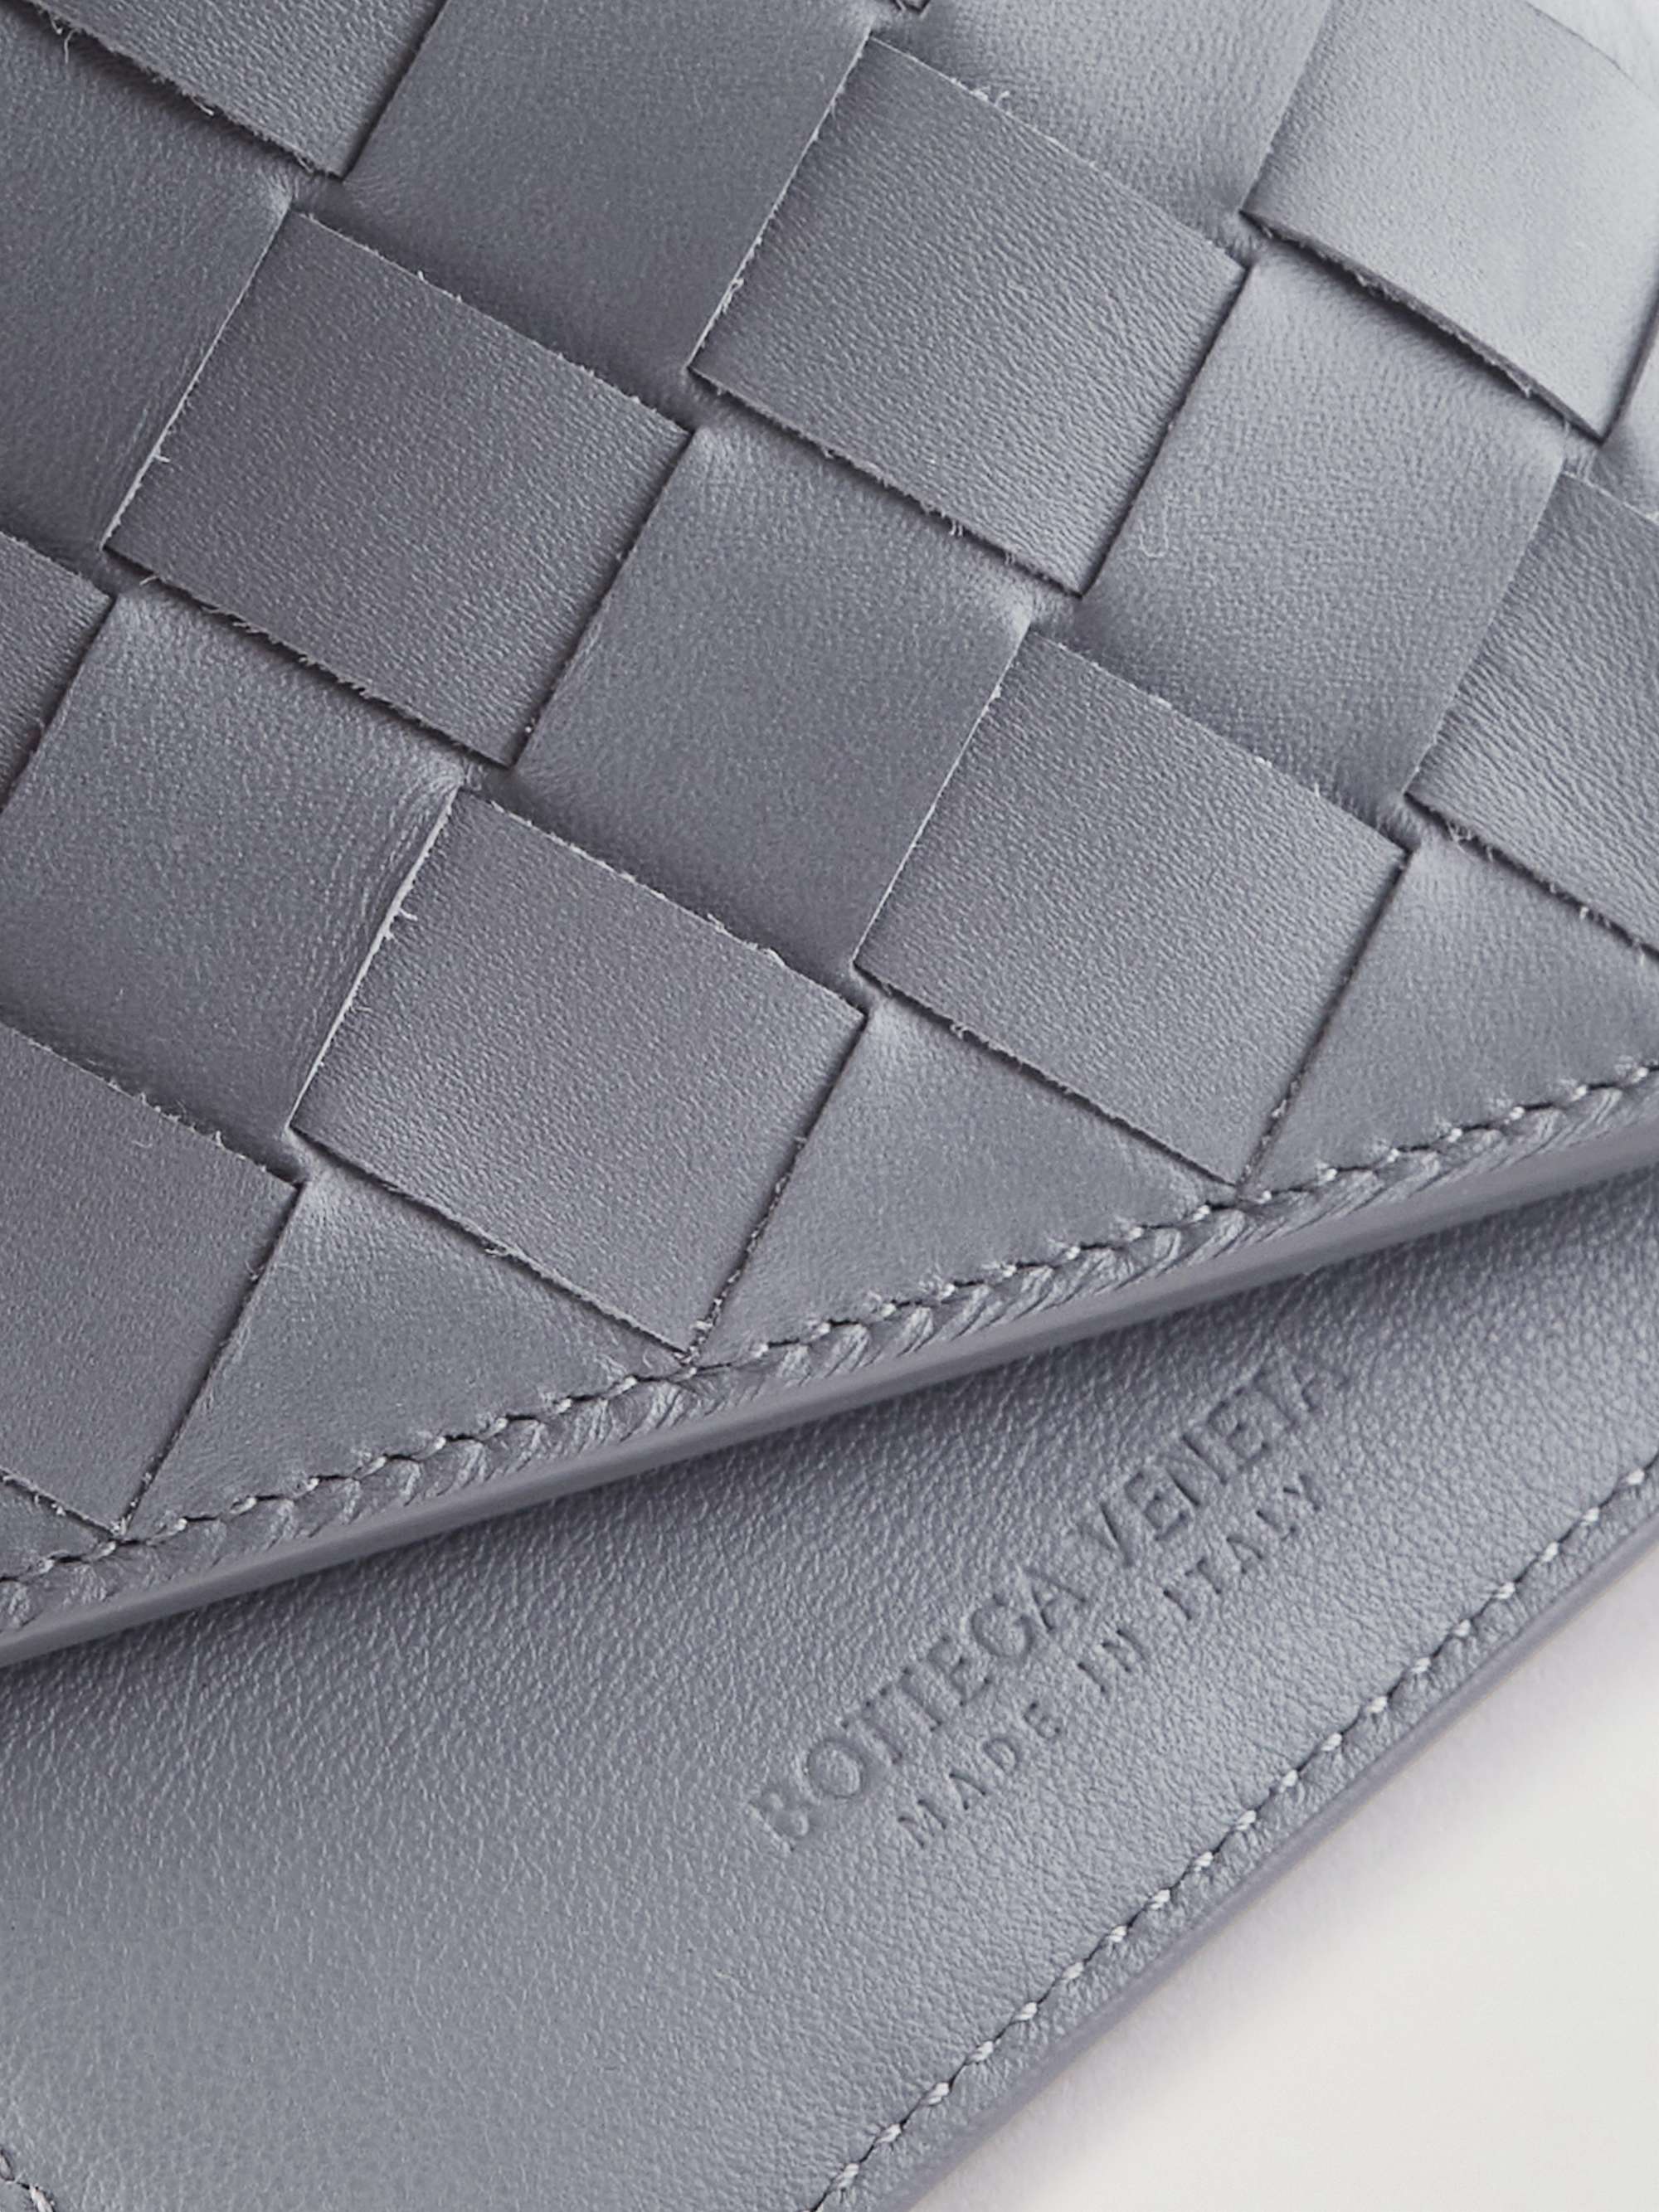 Bottega Veneta Intrecciato Bifold Leather Wallet